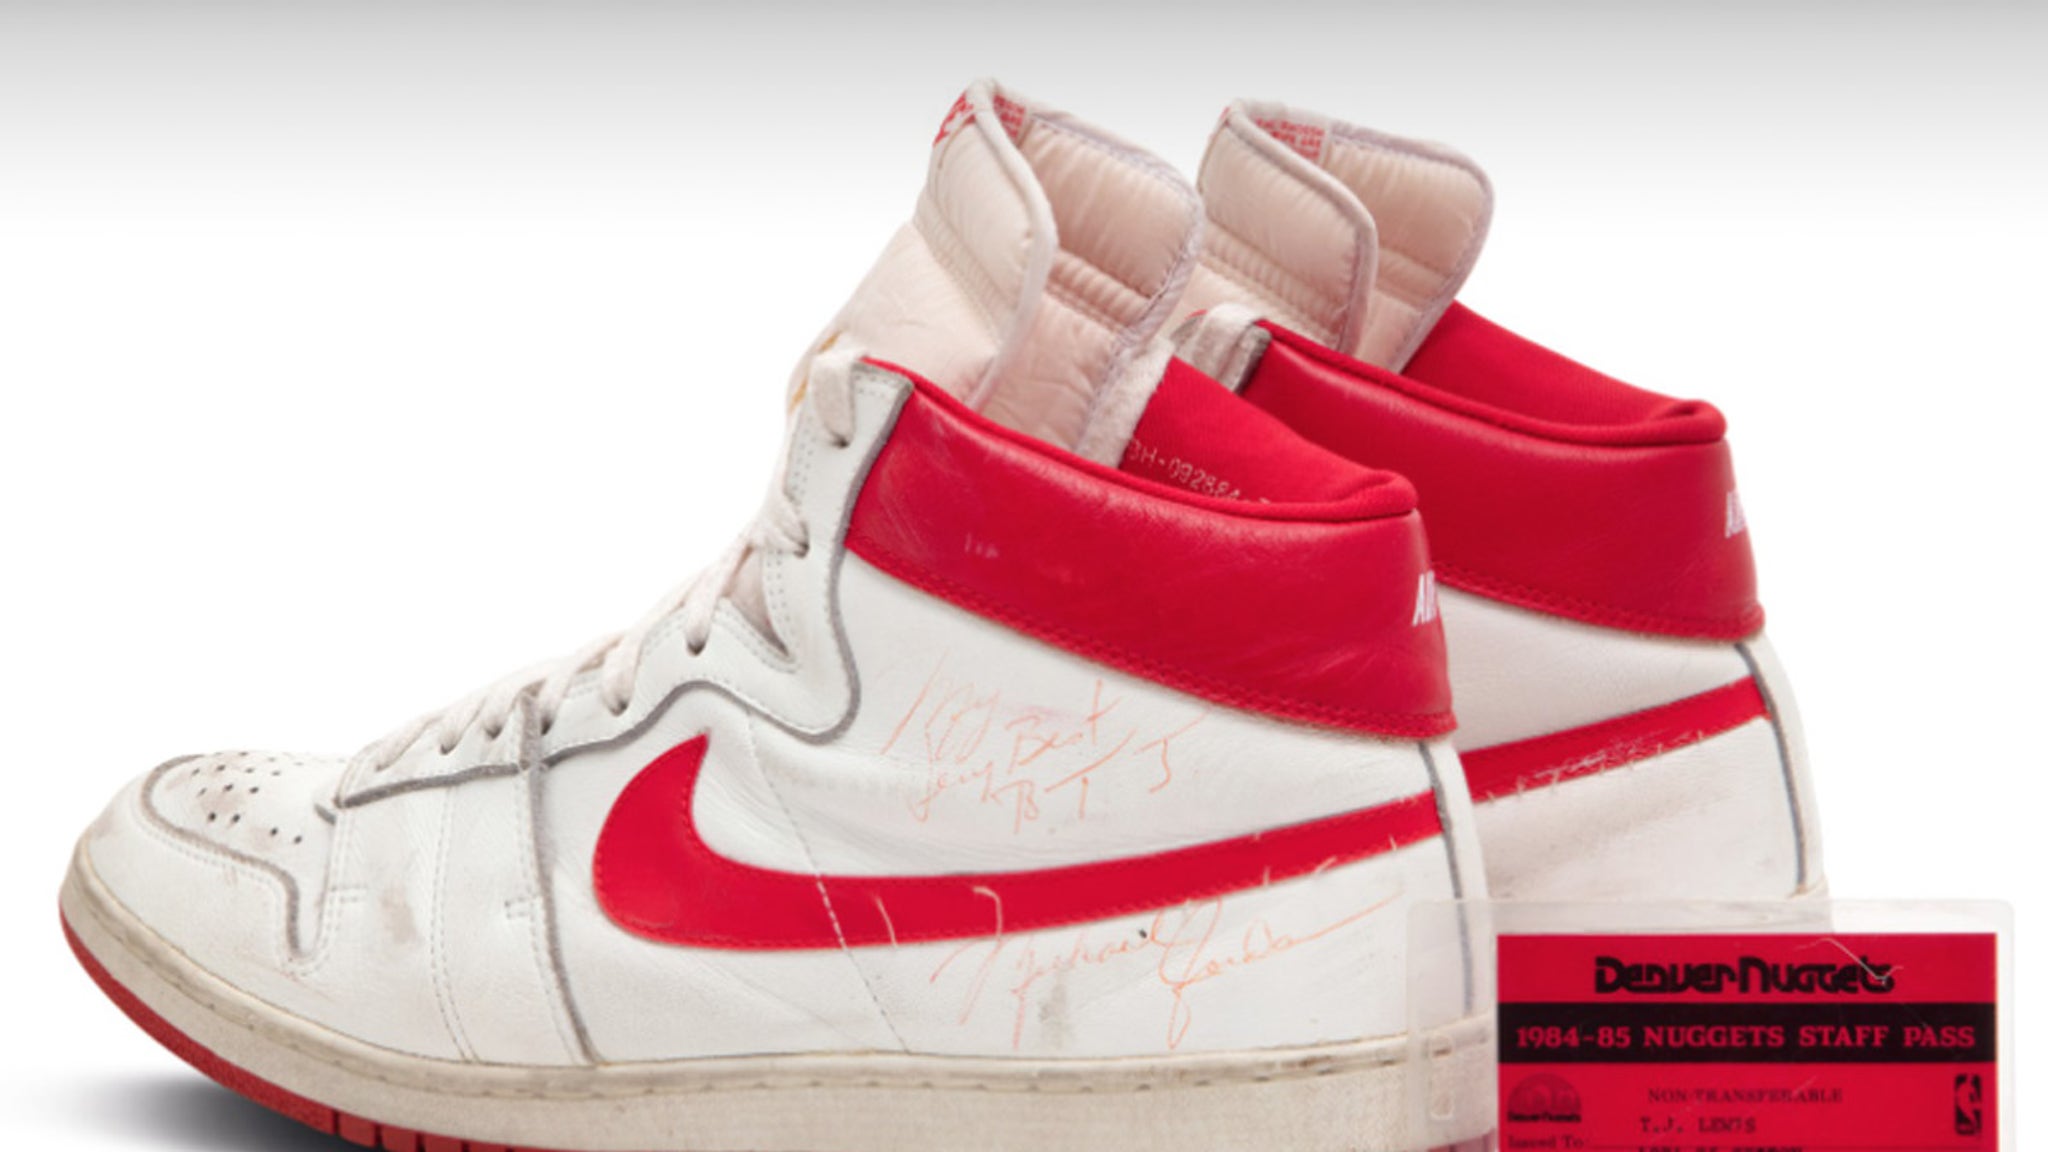 Michael Jordan's Worn & Signed 1984 Nikes Sell For Record $1.4 Million ...